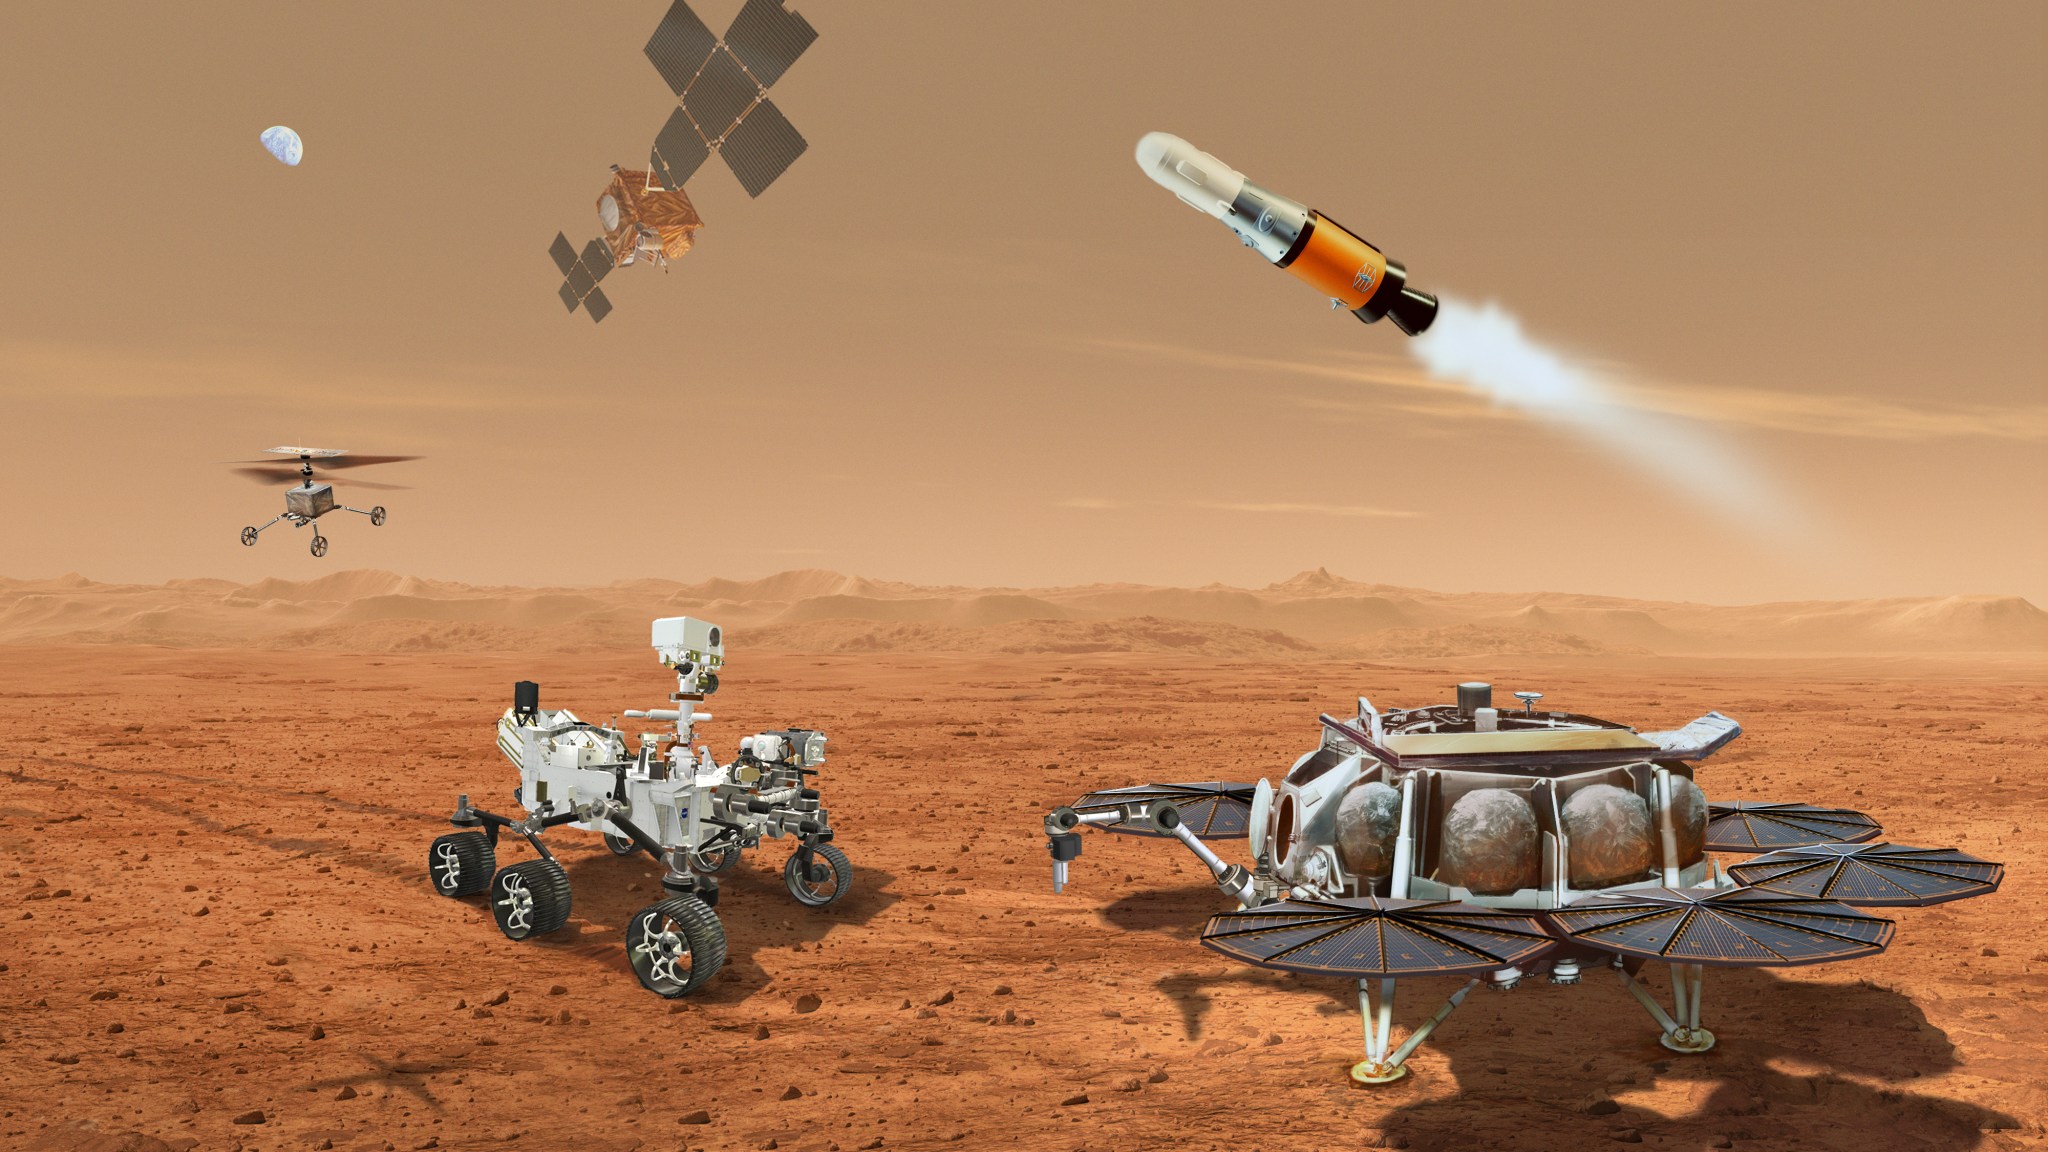 NASA Will Inspire World When It Returns Mars Samples to Earth in 2033 - NASA